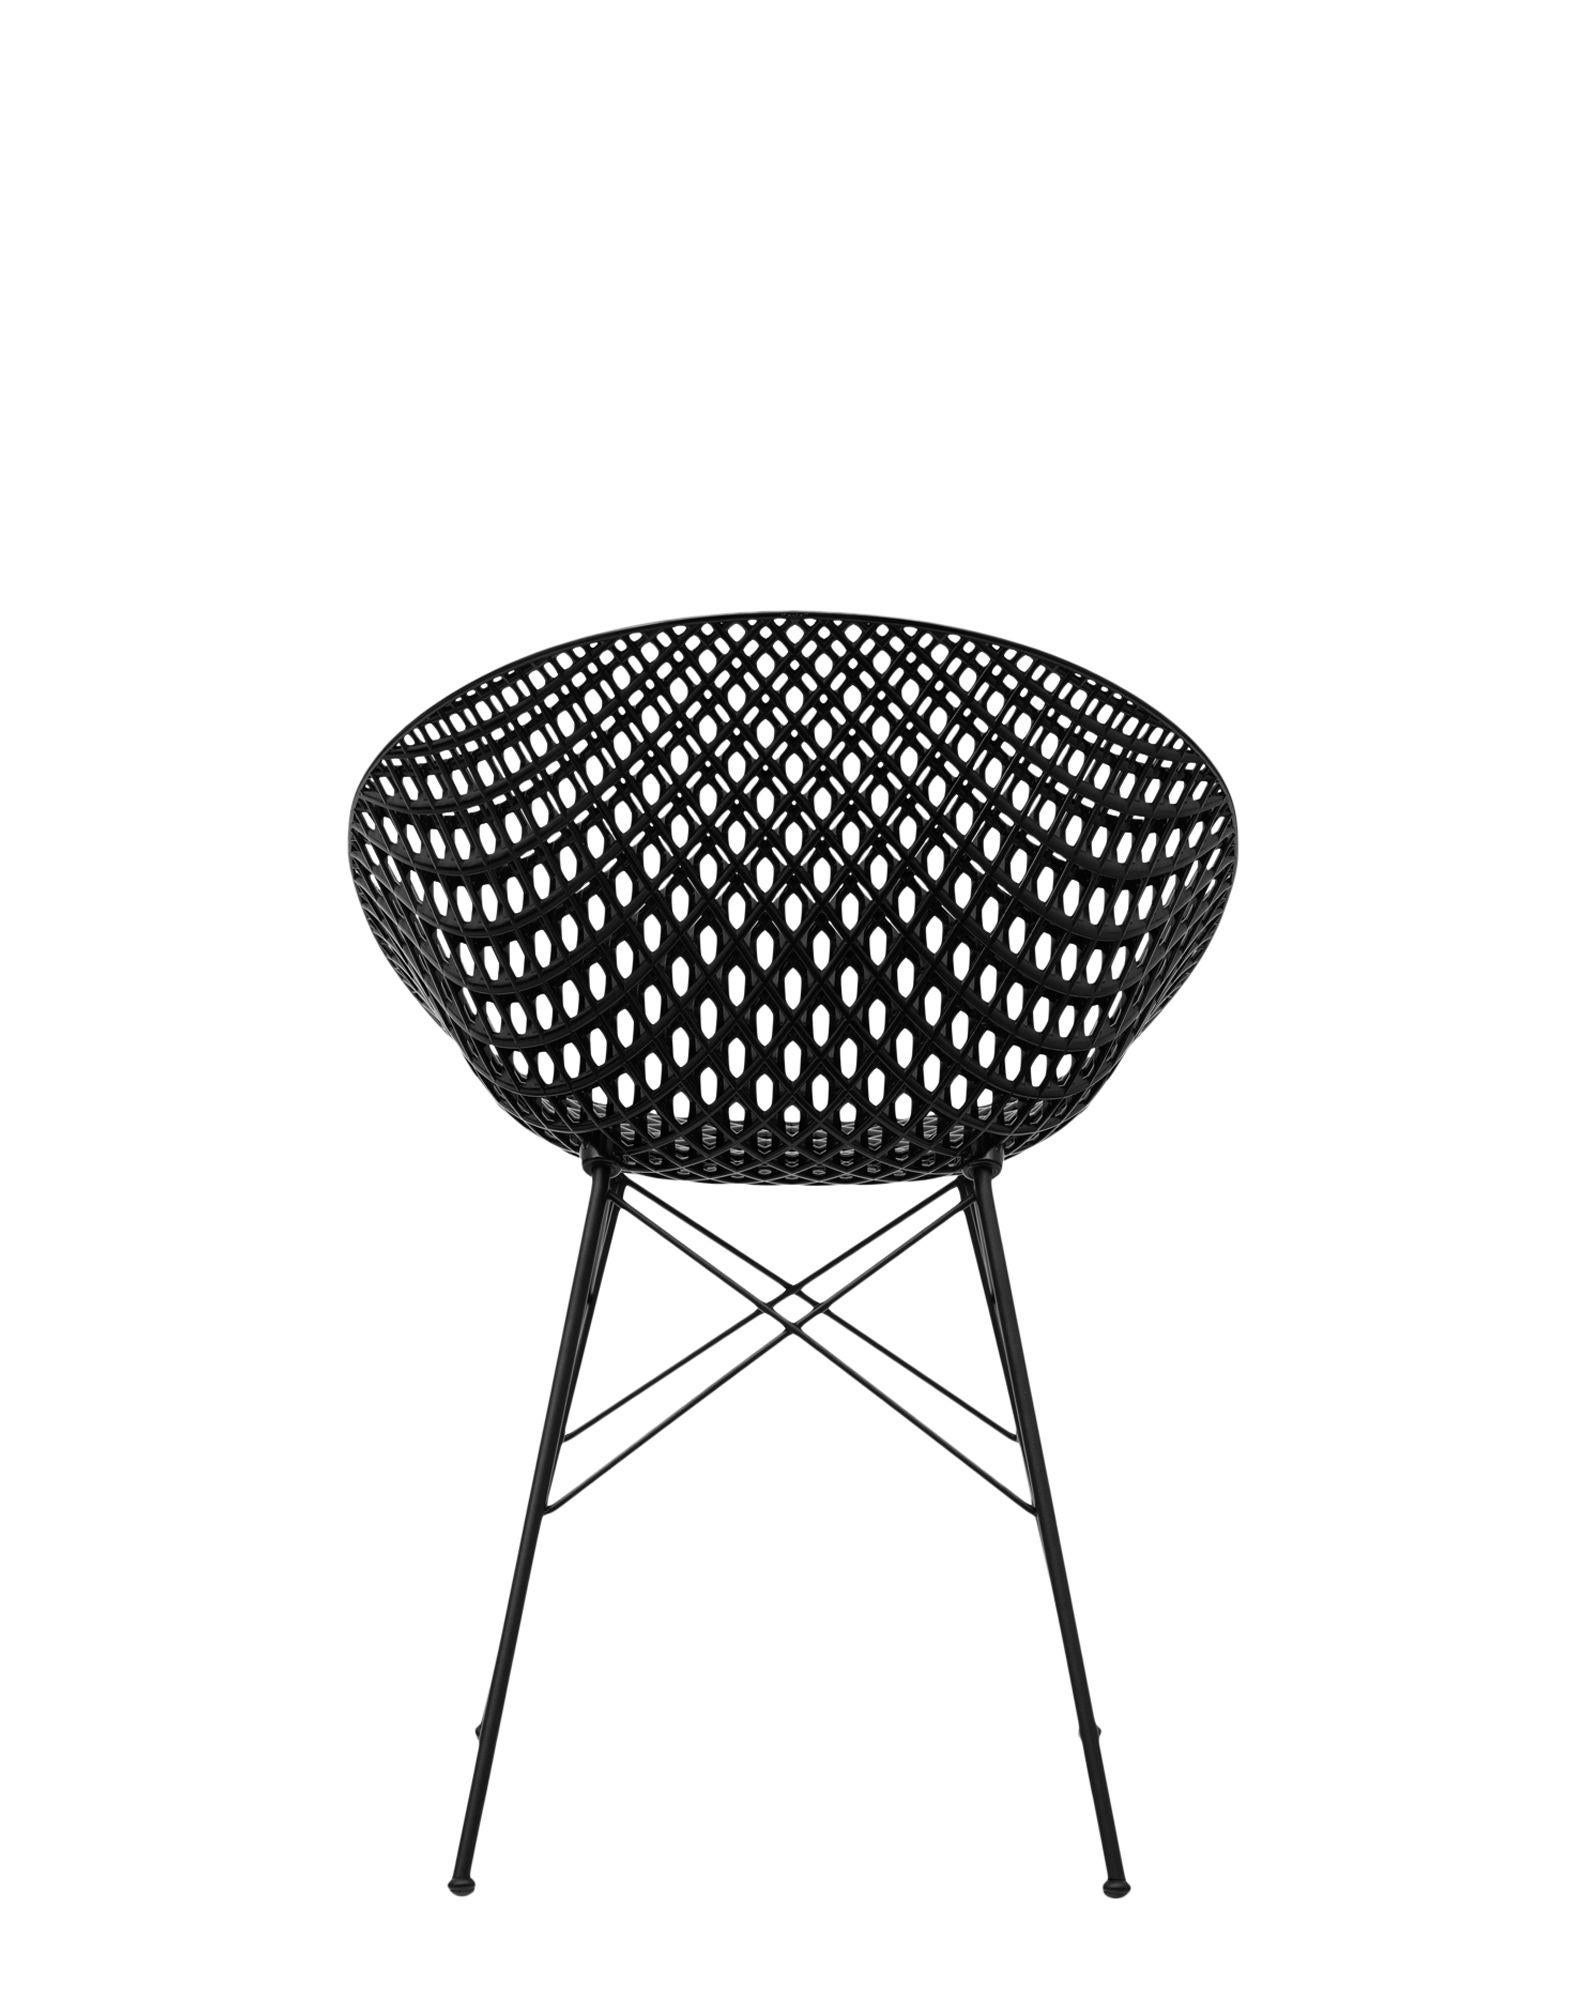 Italian Set of 2 Kartell Smatrik Chair in Black with Black Legs by Tokujin Yoshioka For Sale